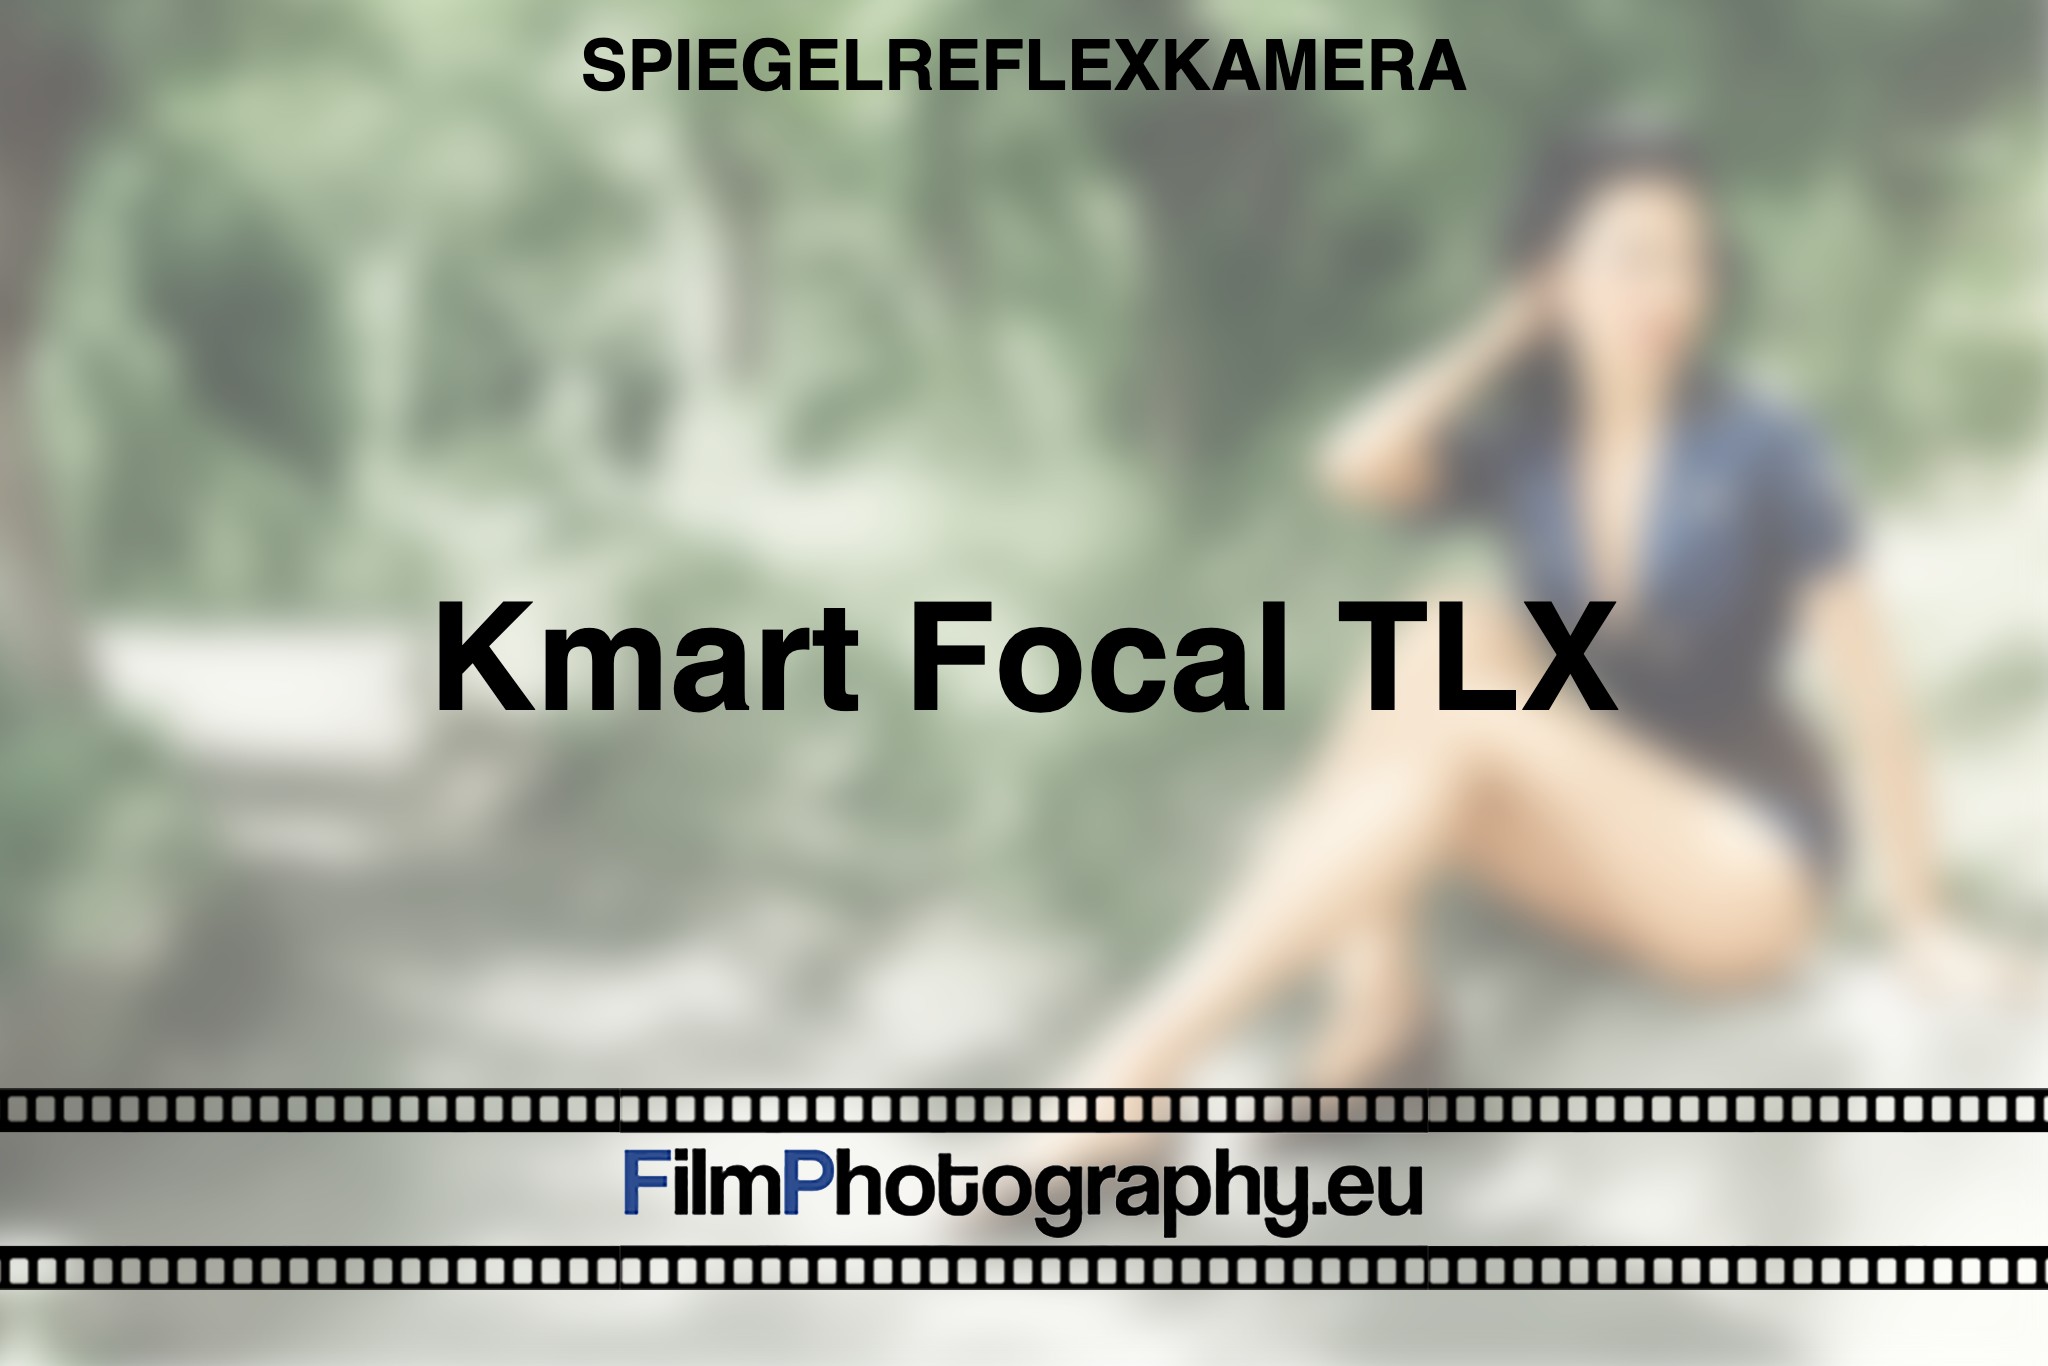 kmart-focal-tlx-spiegelreflexkamera-bnv